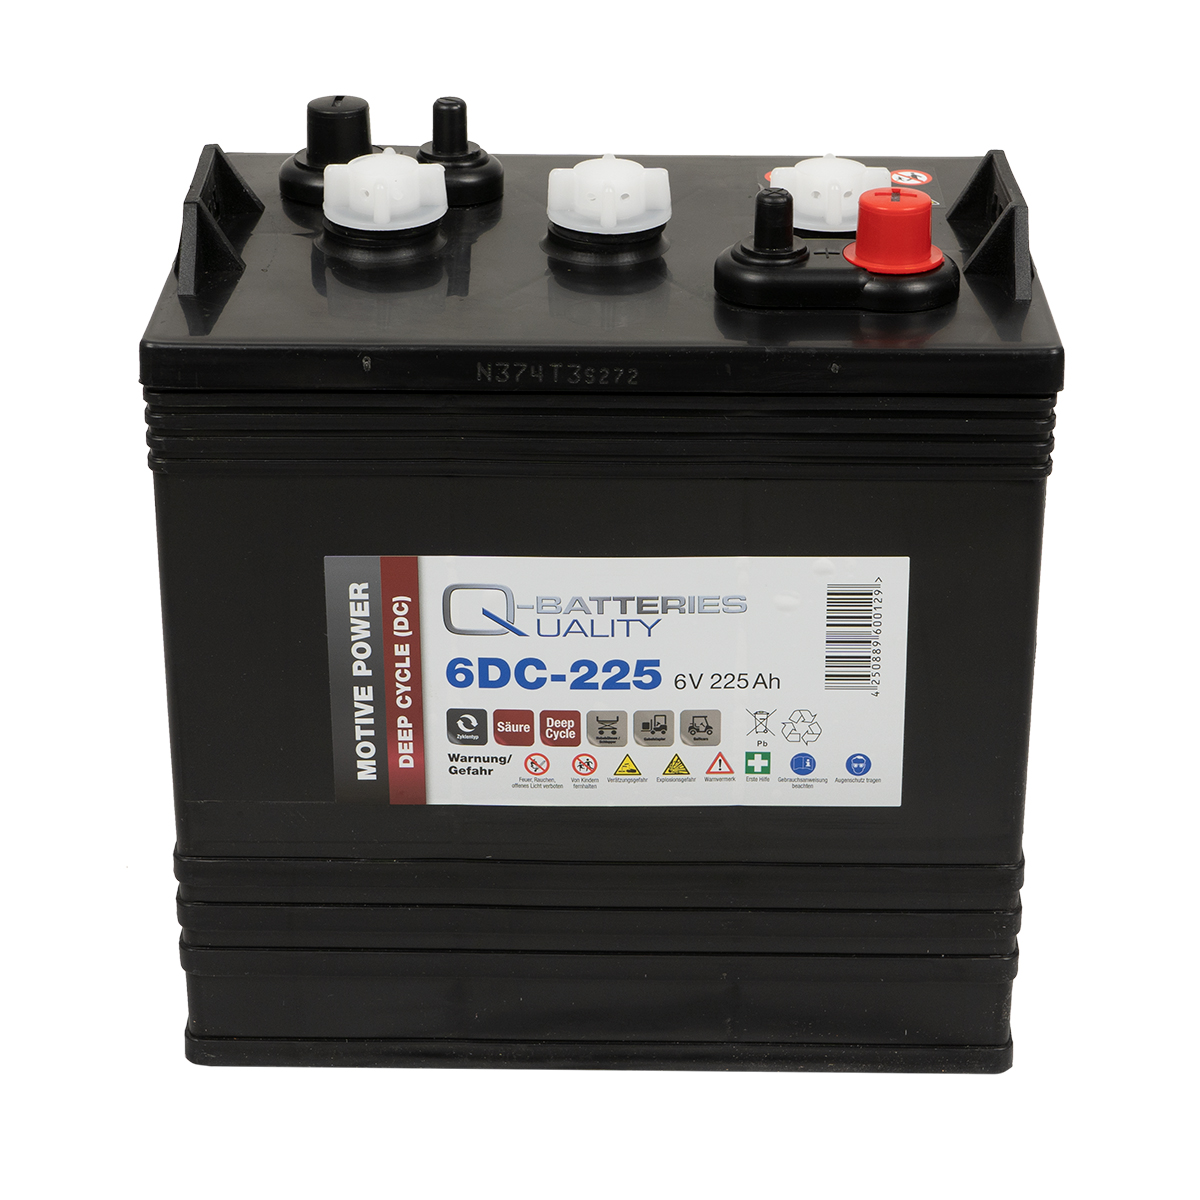 Q-Batteries 6DC-225 6V 225Ah Deep Cycle Batterie für Golfcars, Reinigungsmaschinen, Arbeitsbühnen